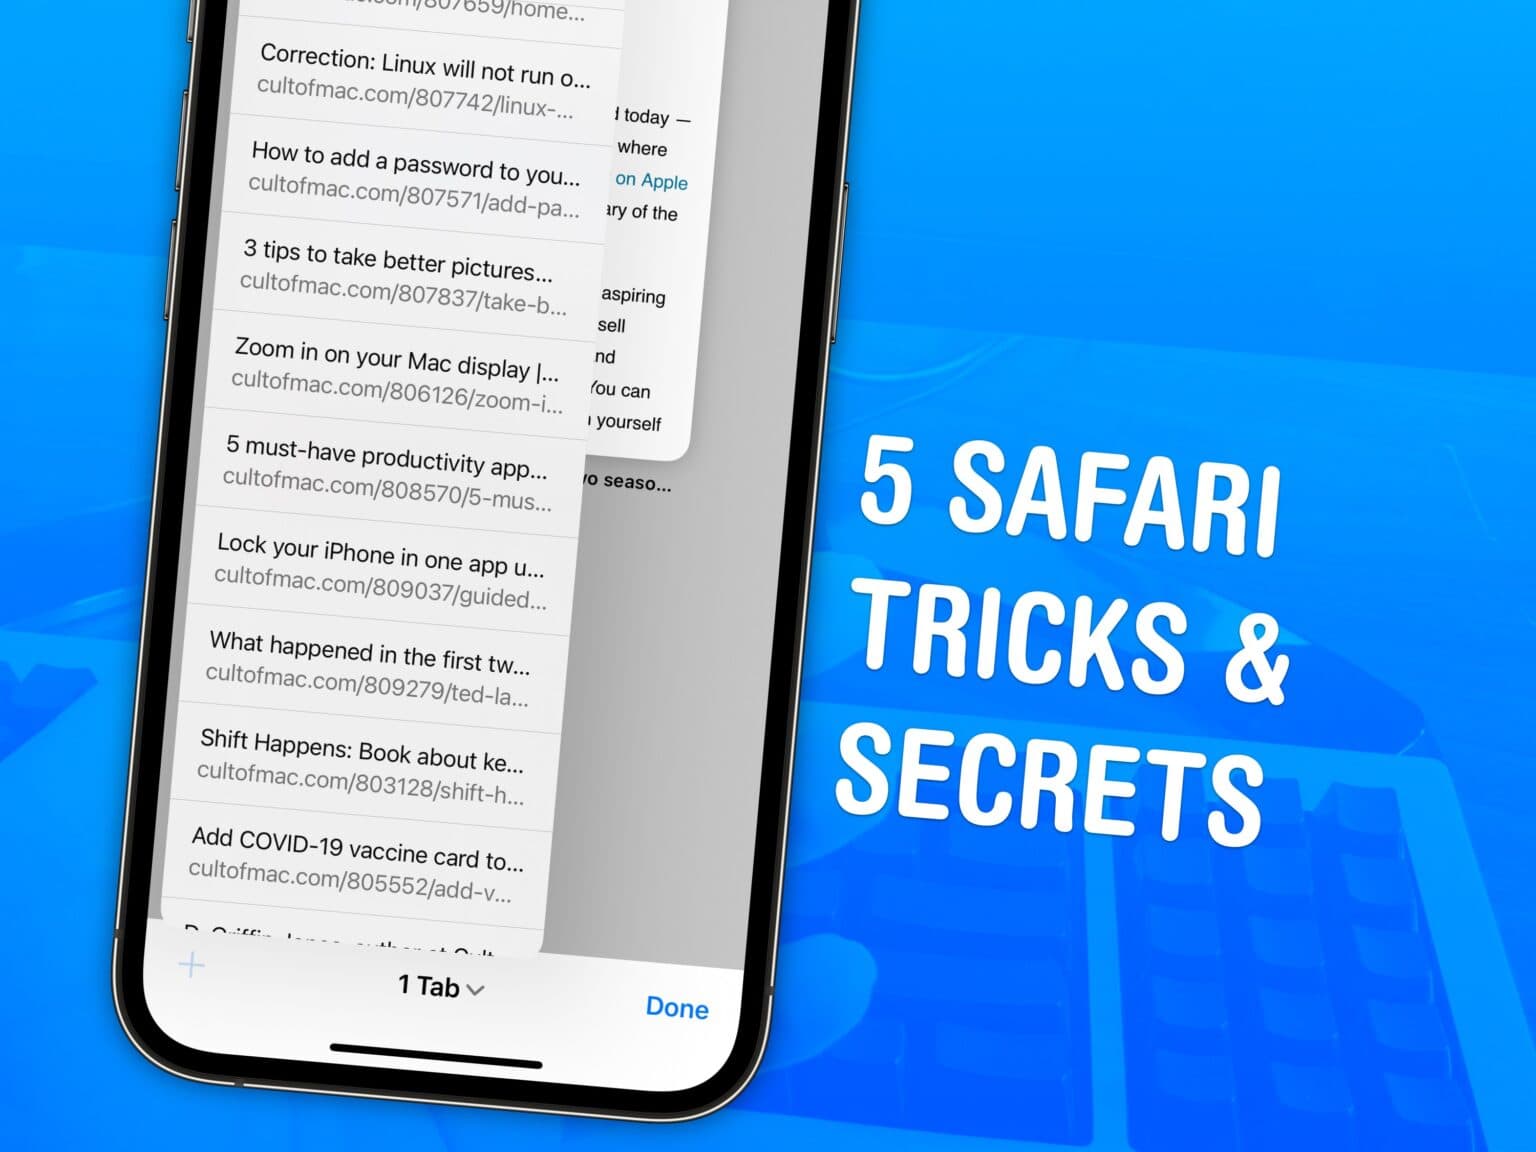 5 Safari Tricks & Secrets